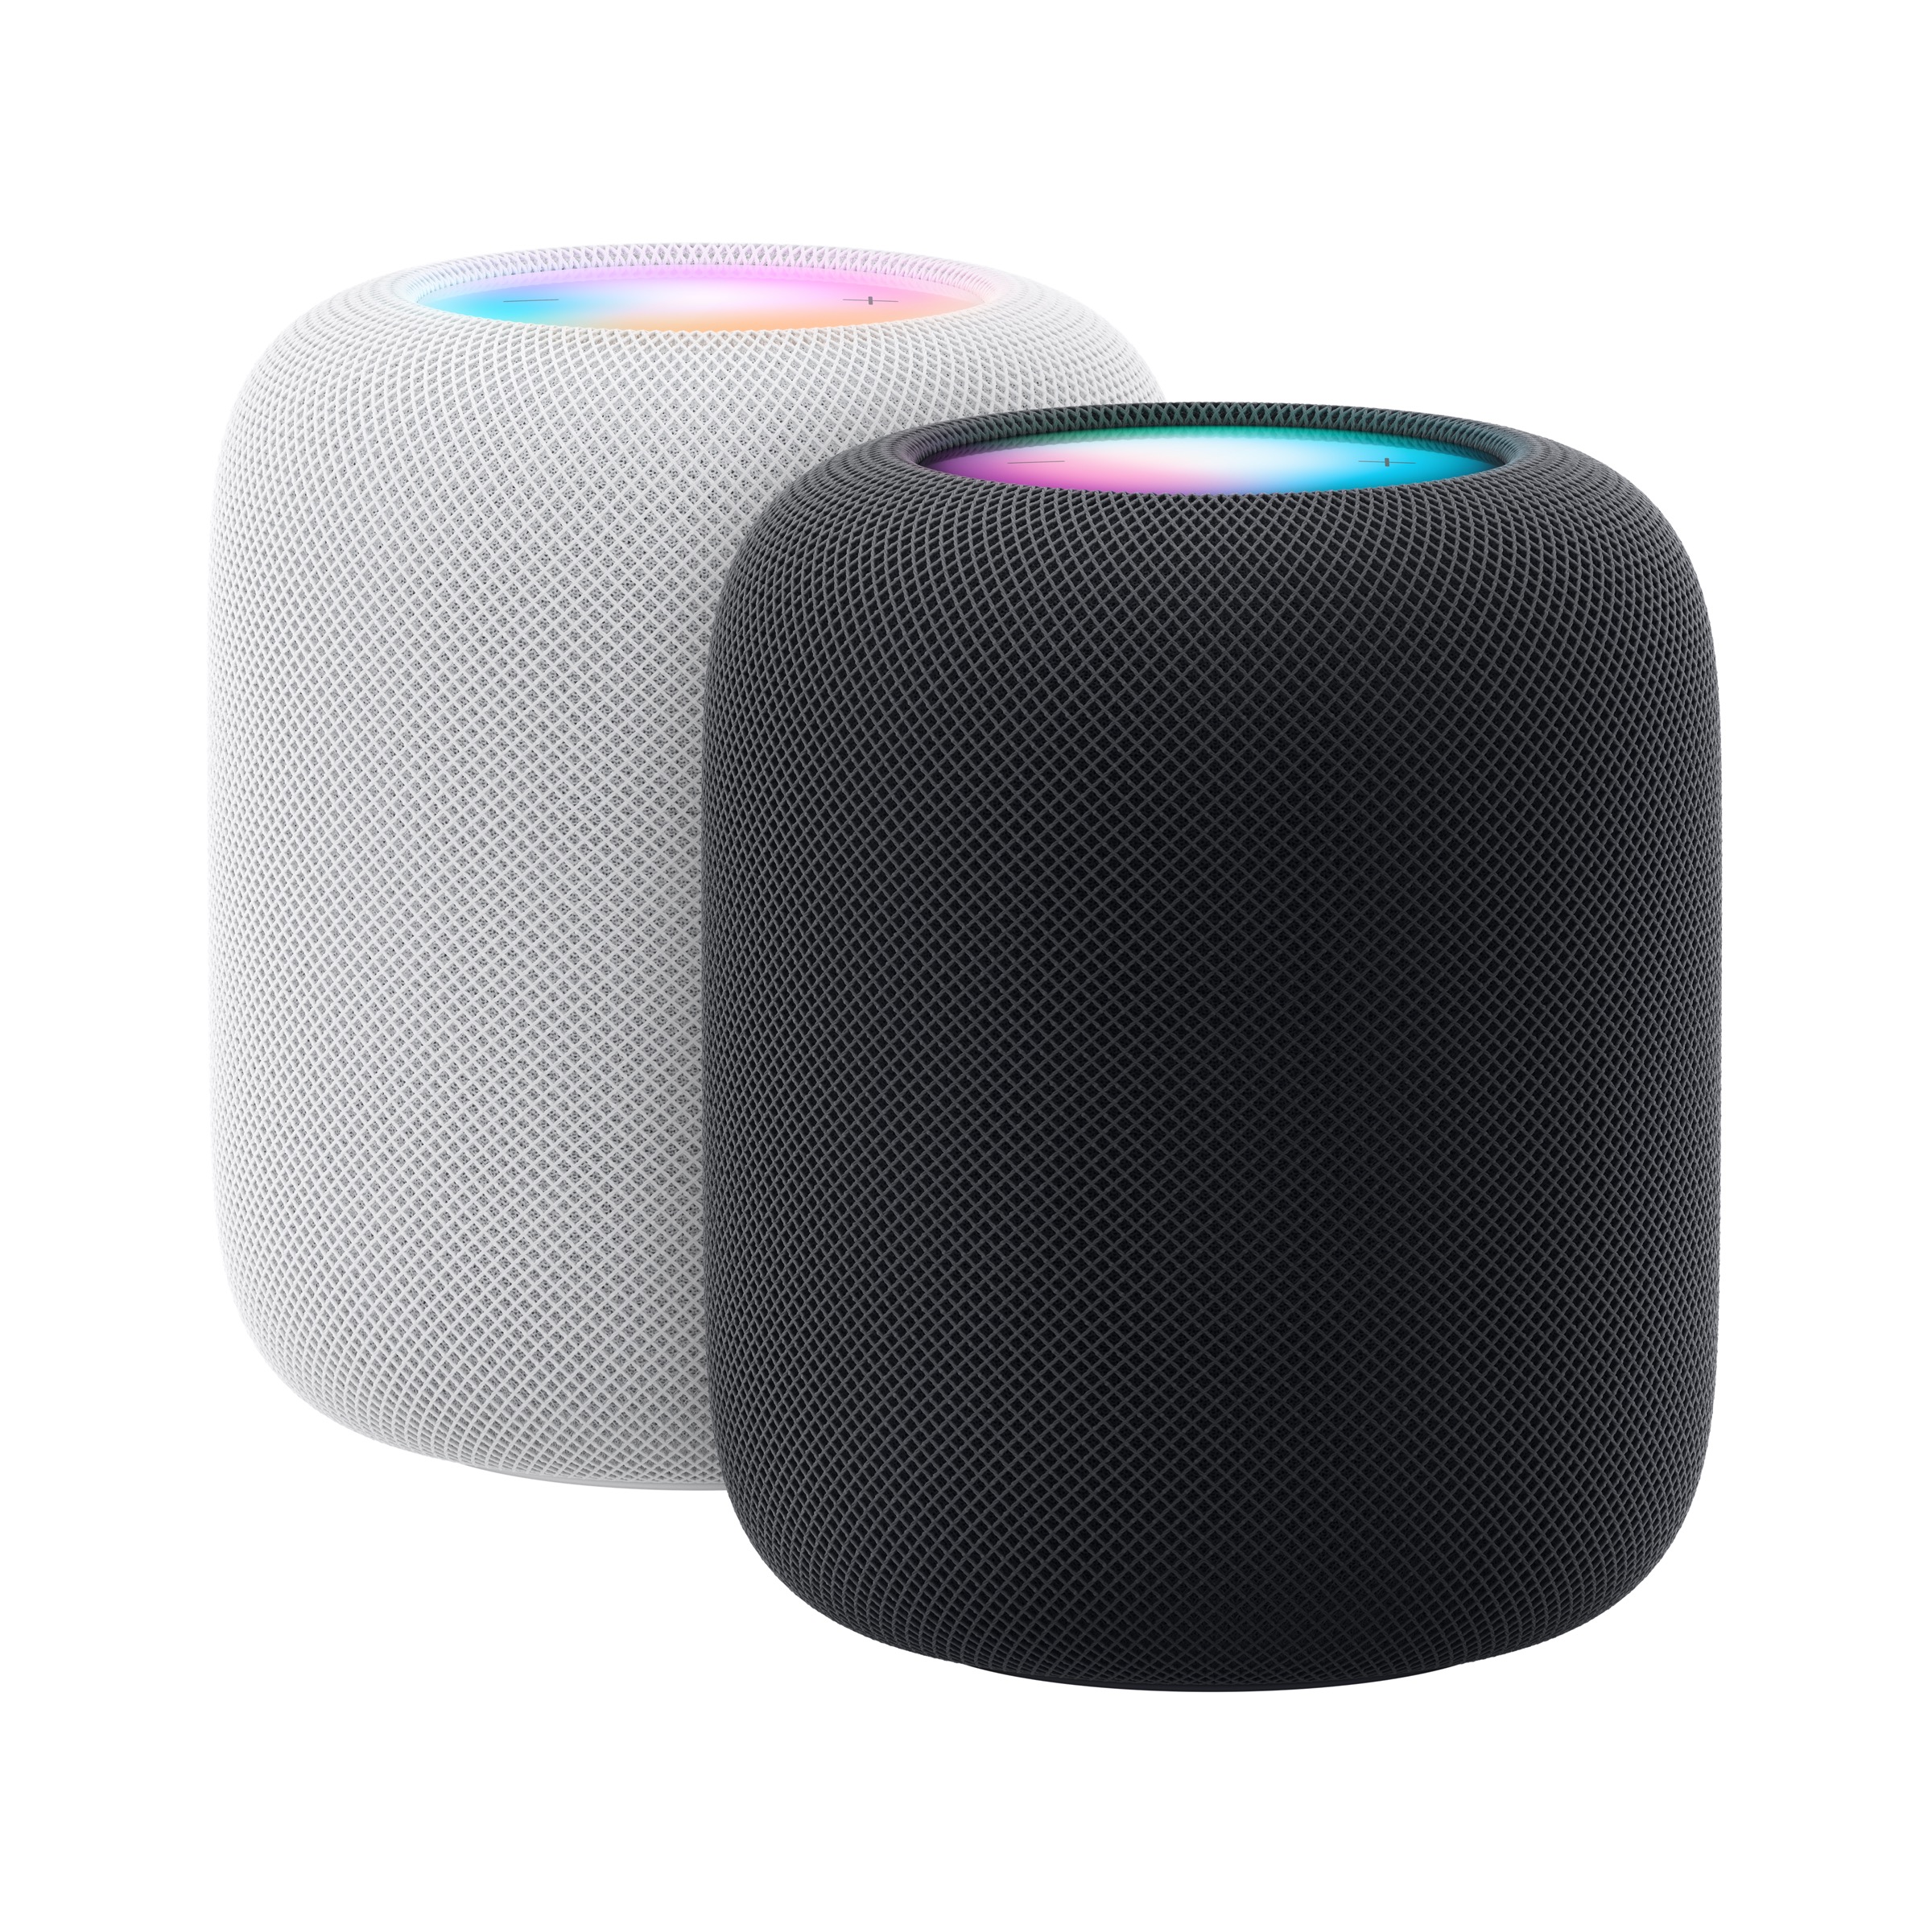 Apple 推出第二代HomePod，带来突破性音质与智能体验- Midifan：我们